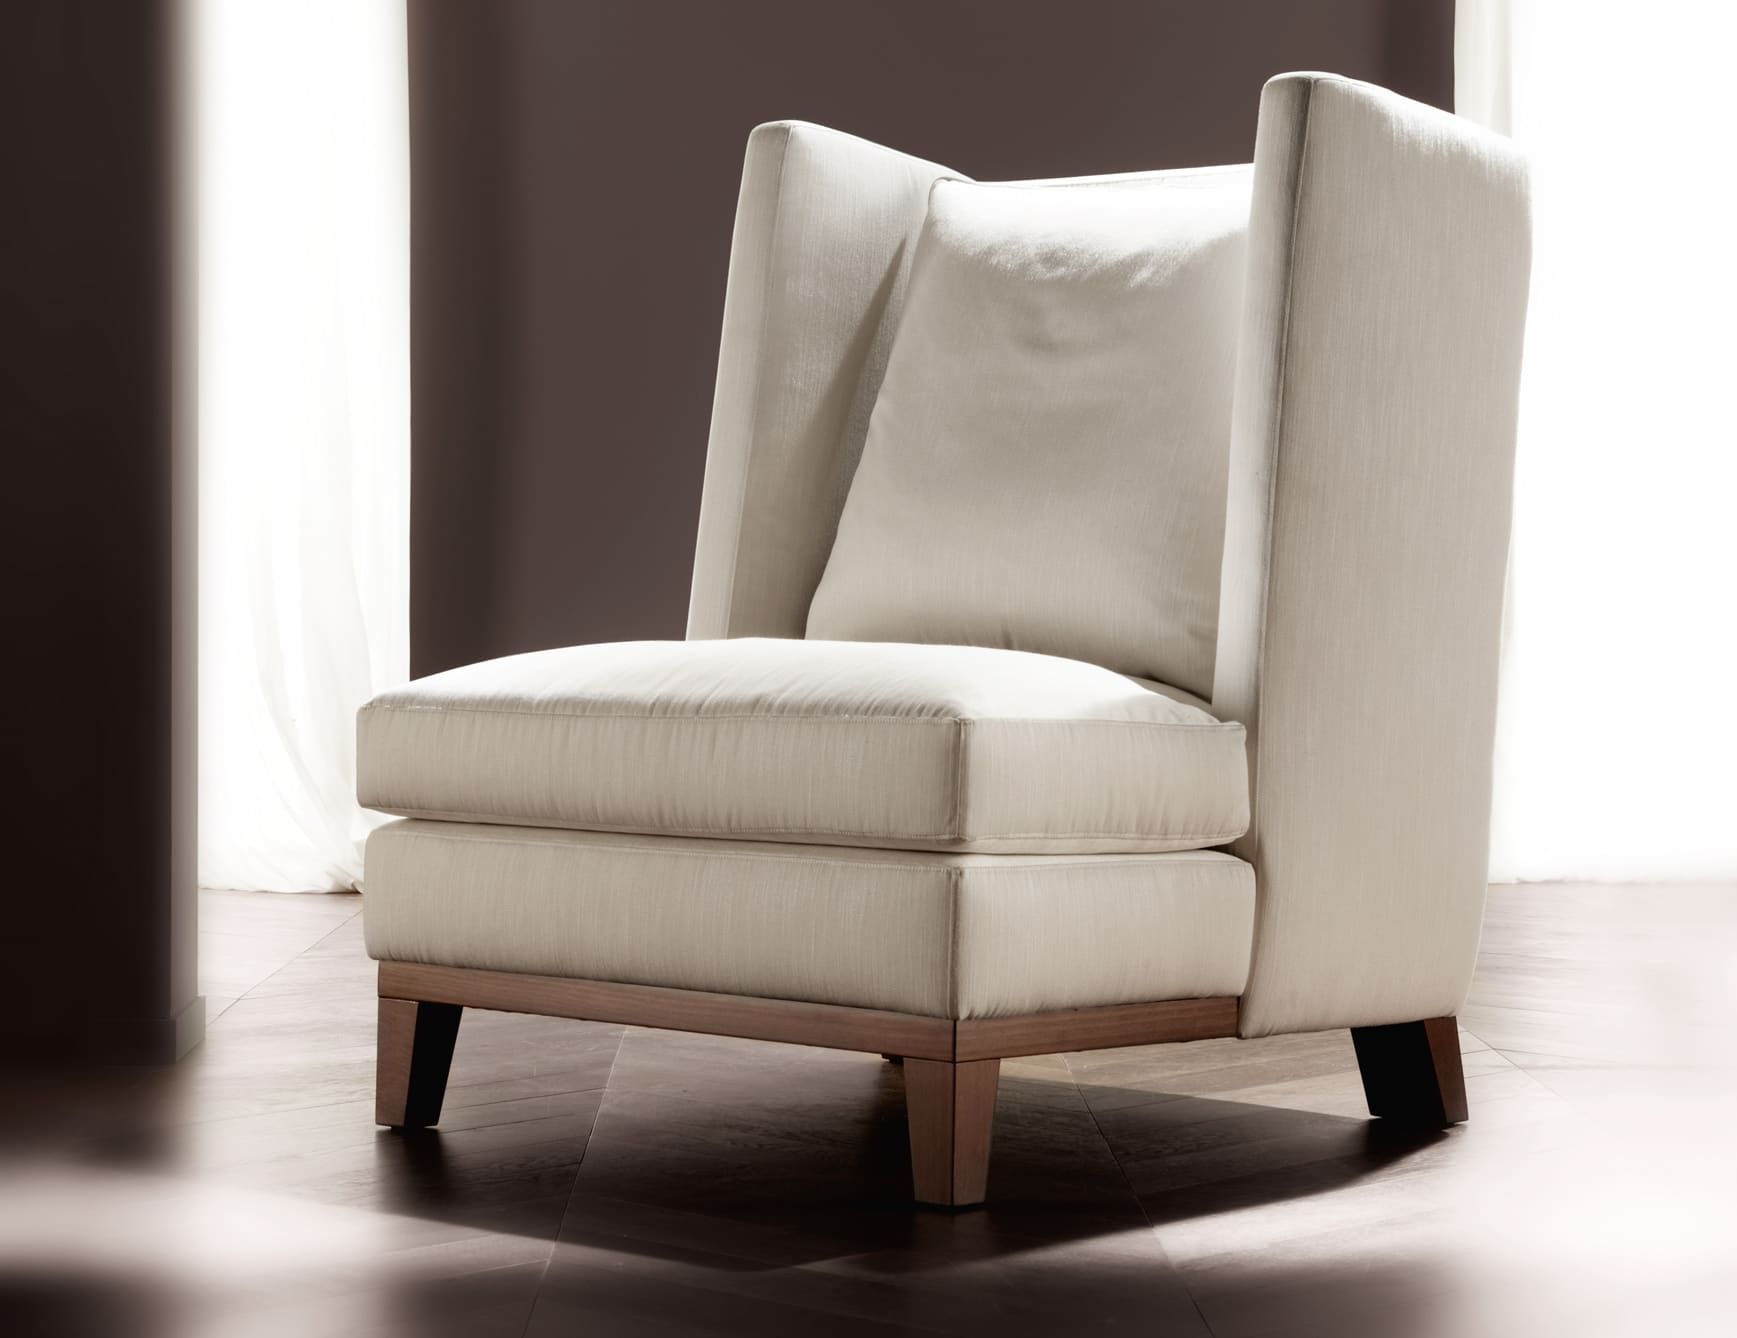 Sempre Lounge Chair modern Italian sofa chair with white fabric